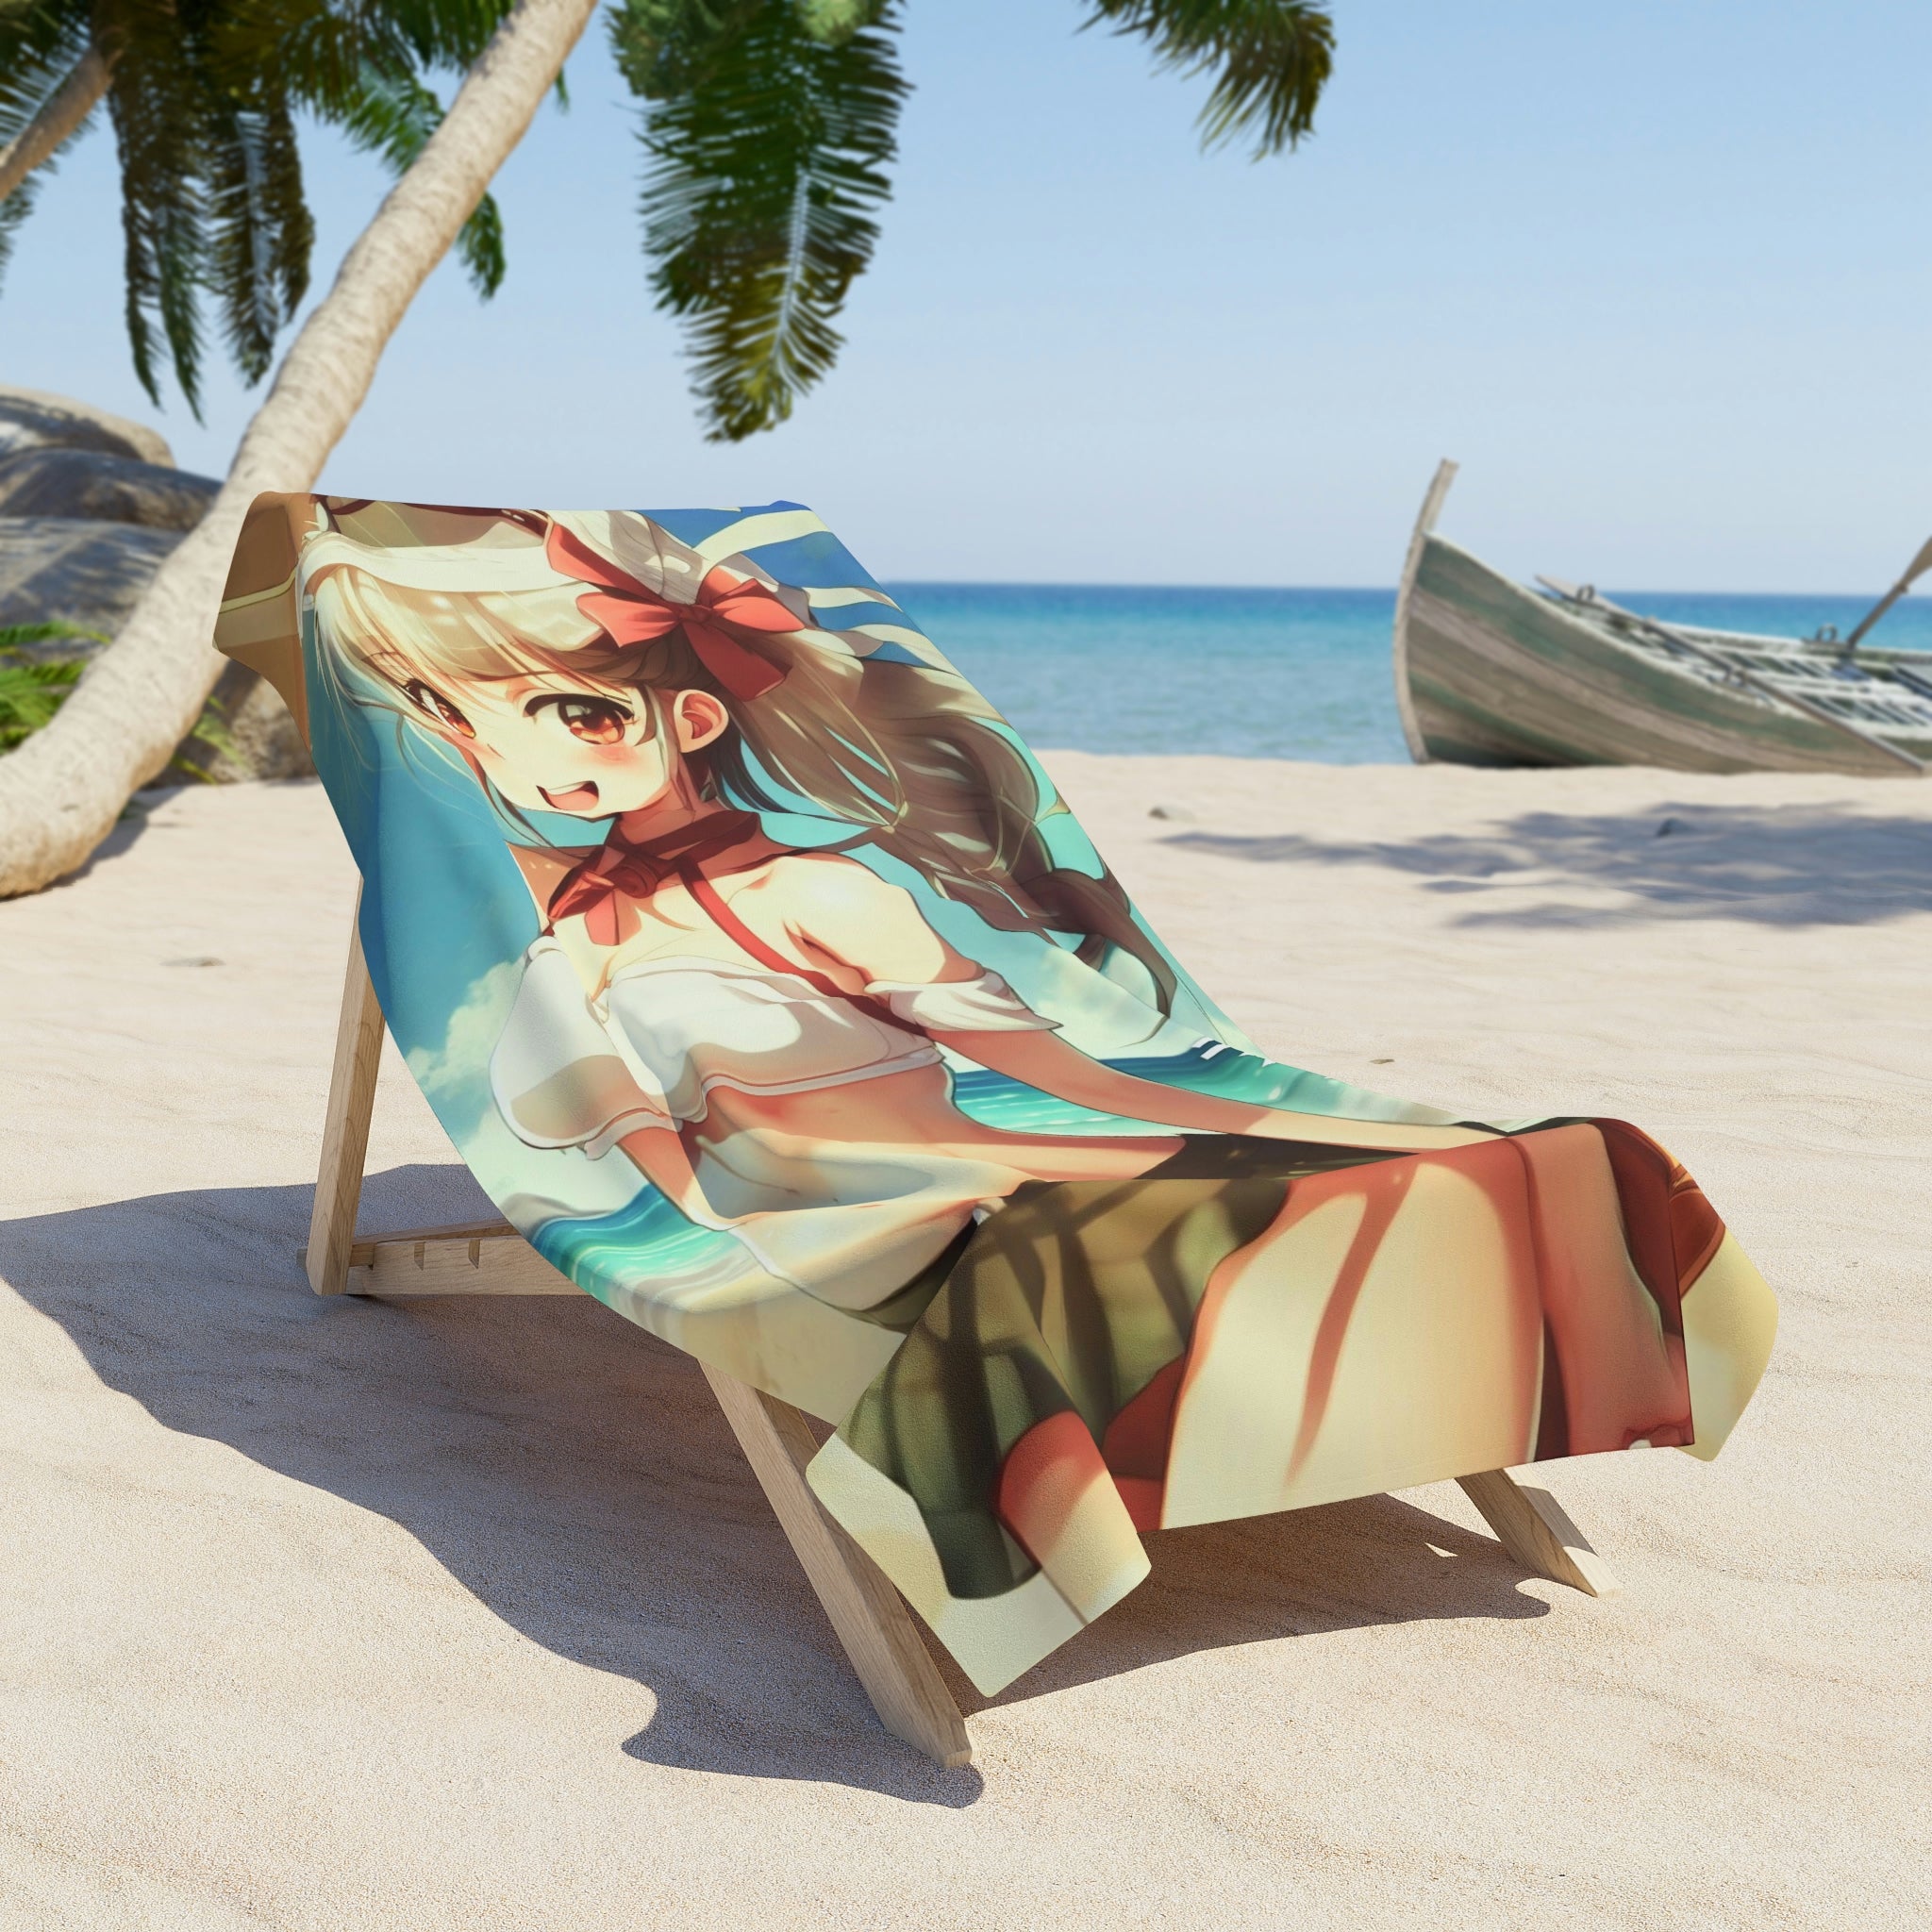 Anime Girl in Towel - (3d Model Download) : r/3Dmodeling